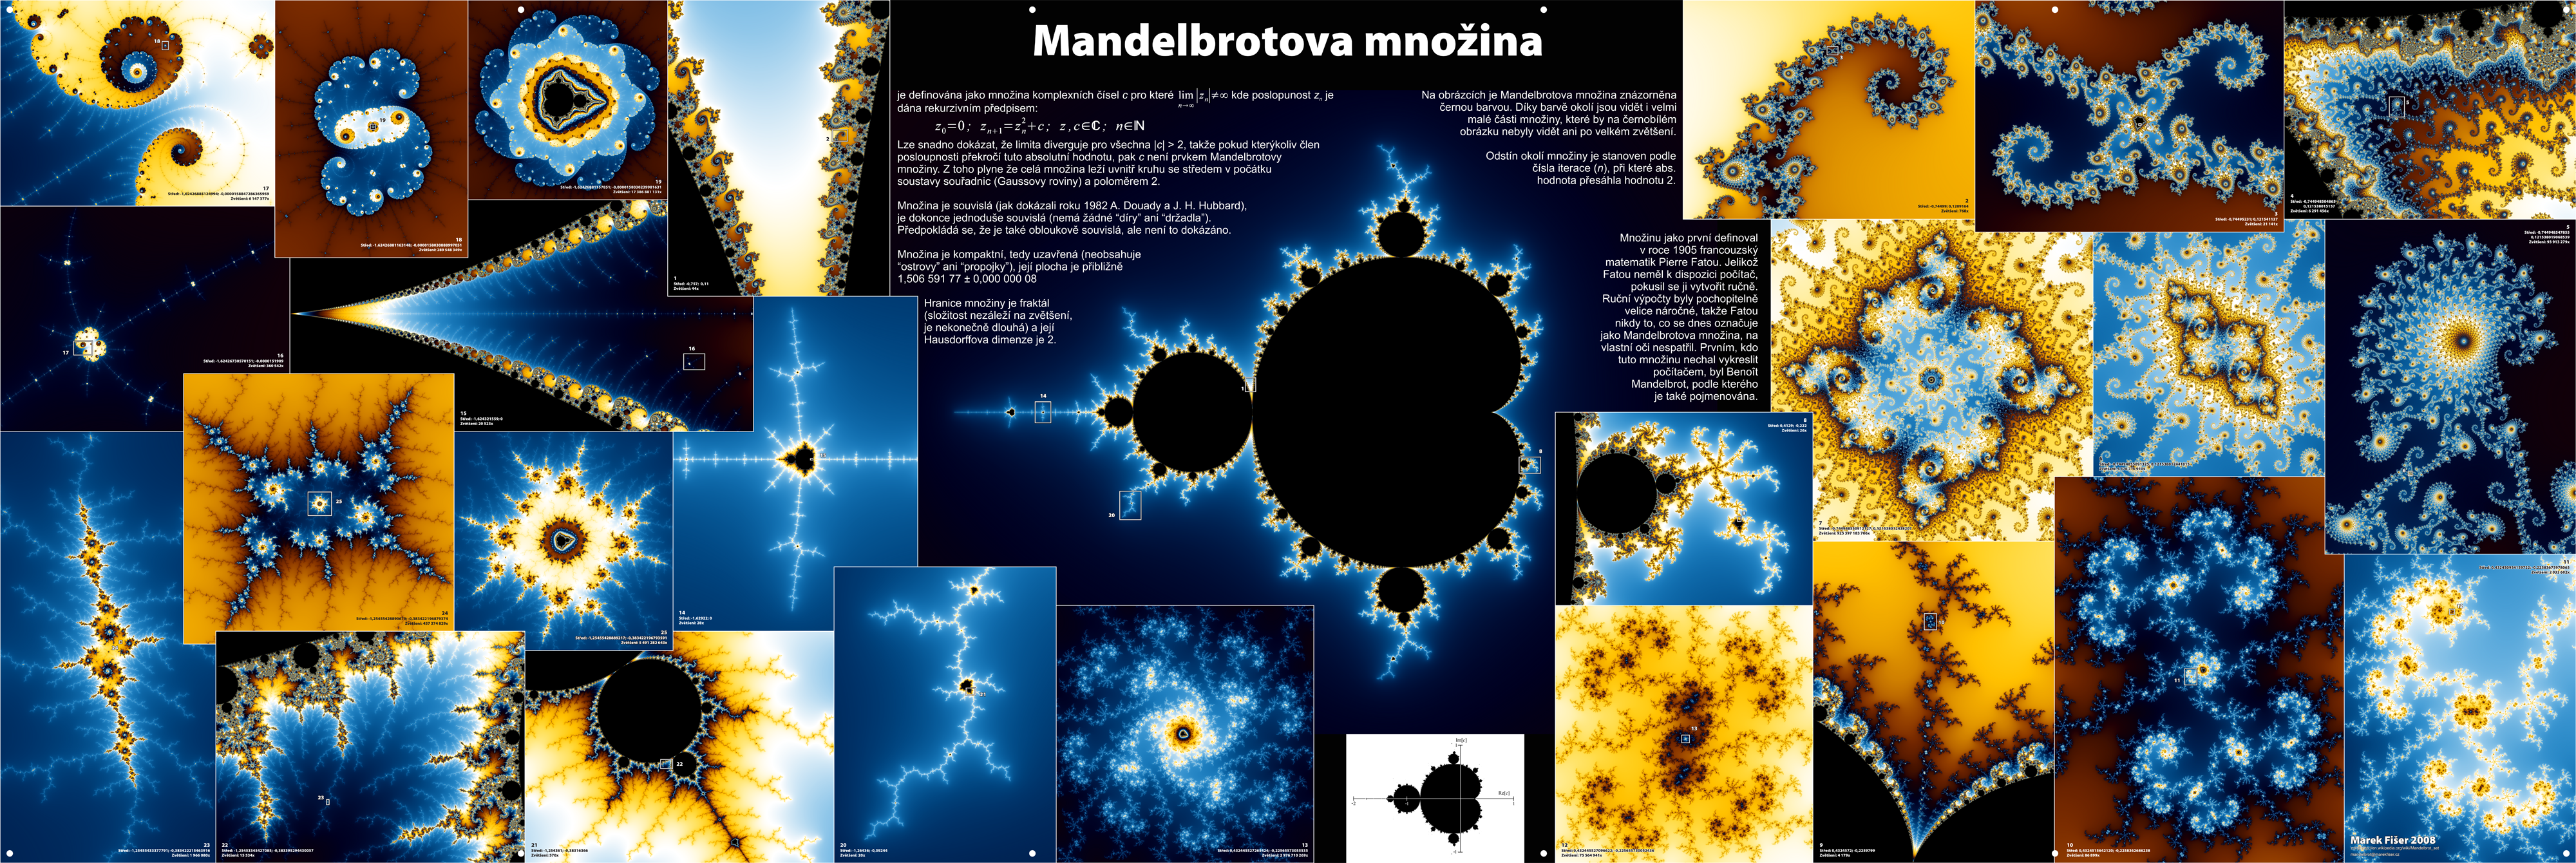 Mandelbrot set poster: Introduction – MarekFiser.com